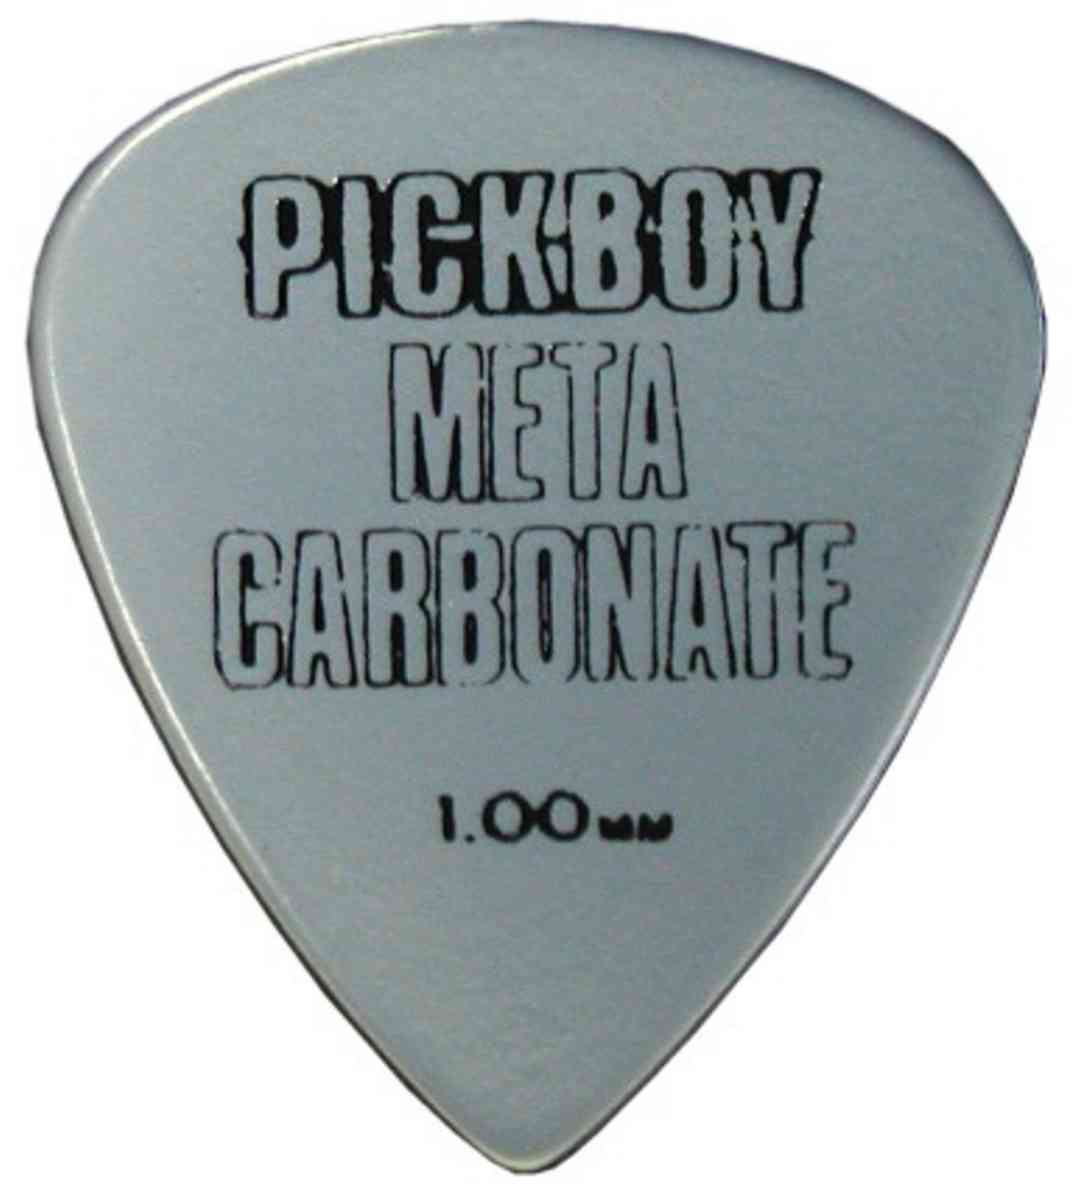 PickBoy Meta-Carbonate